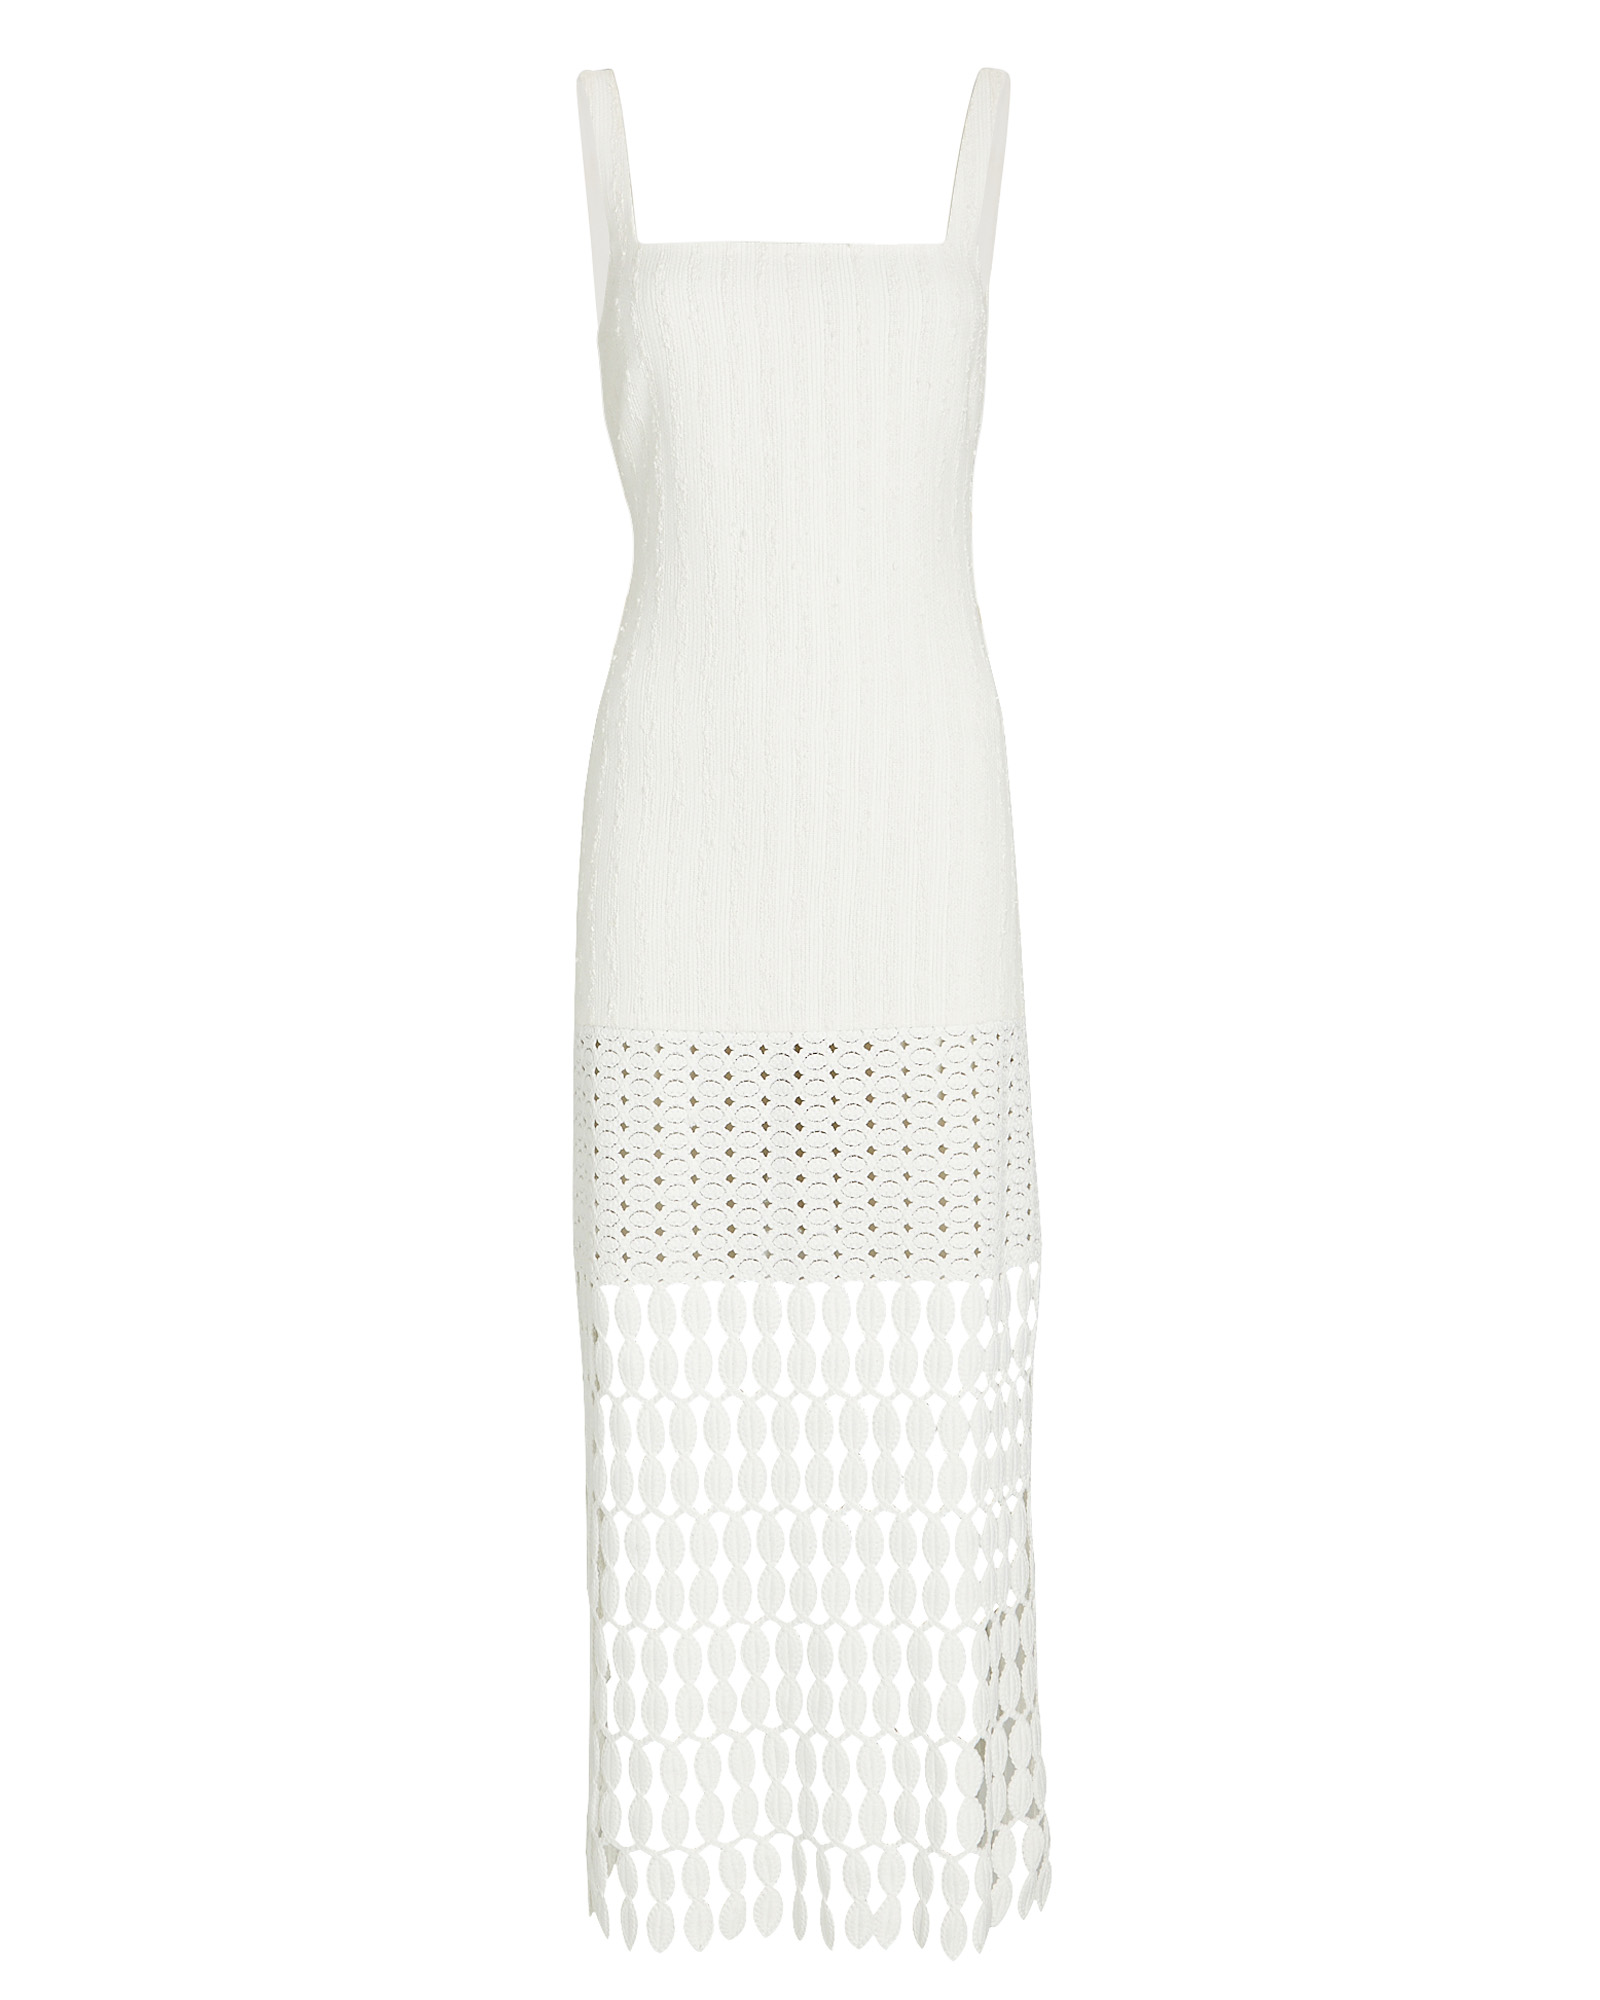 Alexis South Scalloped Lace Knit Midi Dress | INTERMIX®